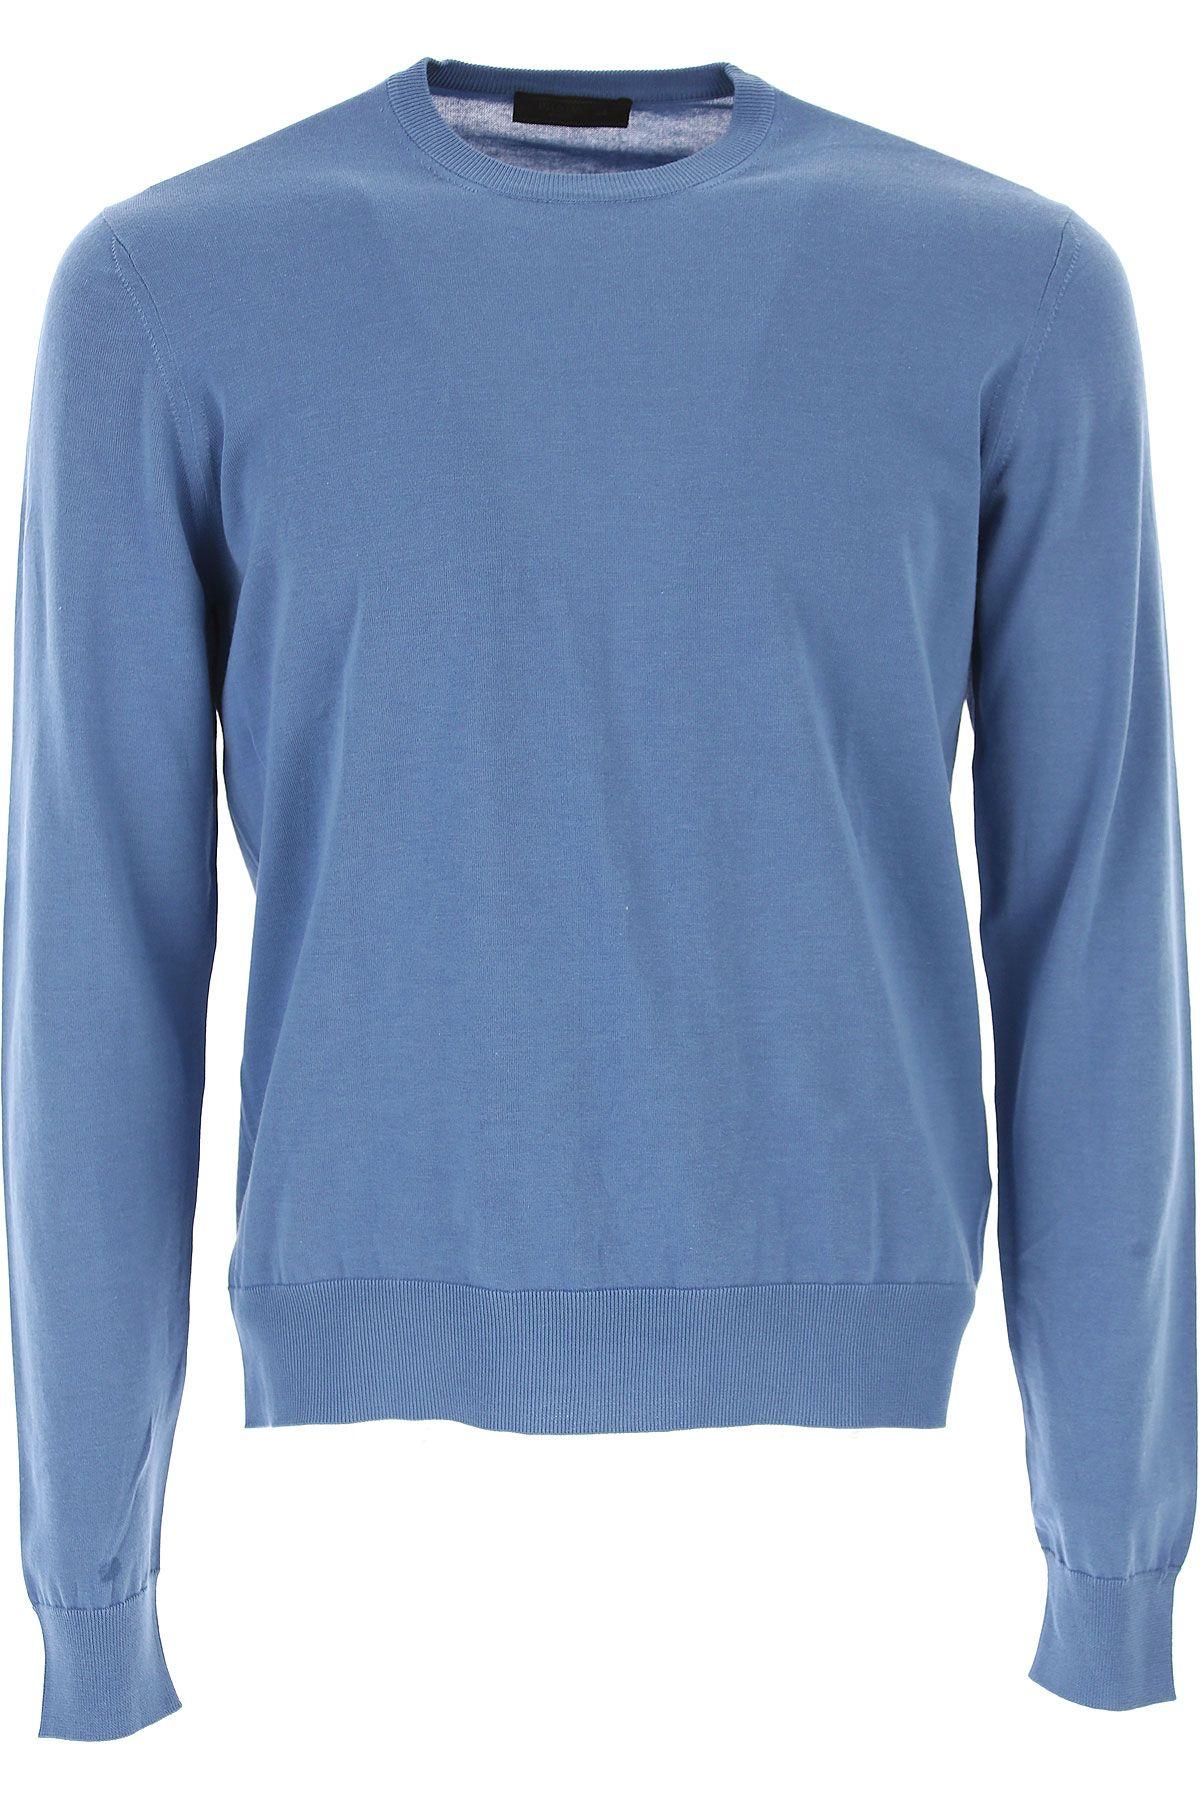 Prada Light Blue Cotton Sweater for Men - Lyst